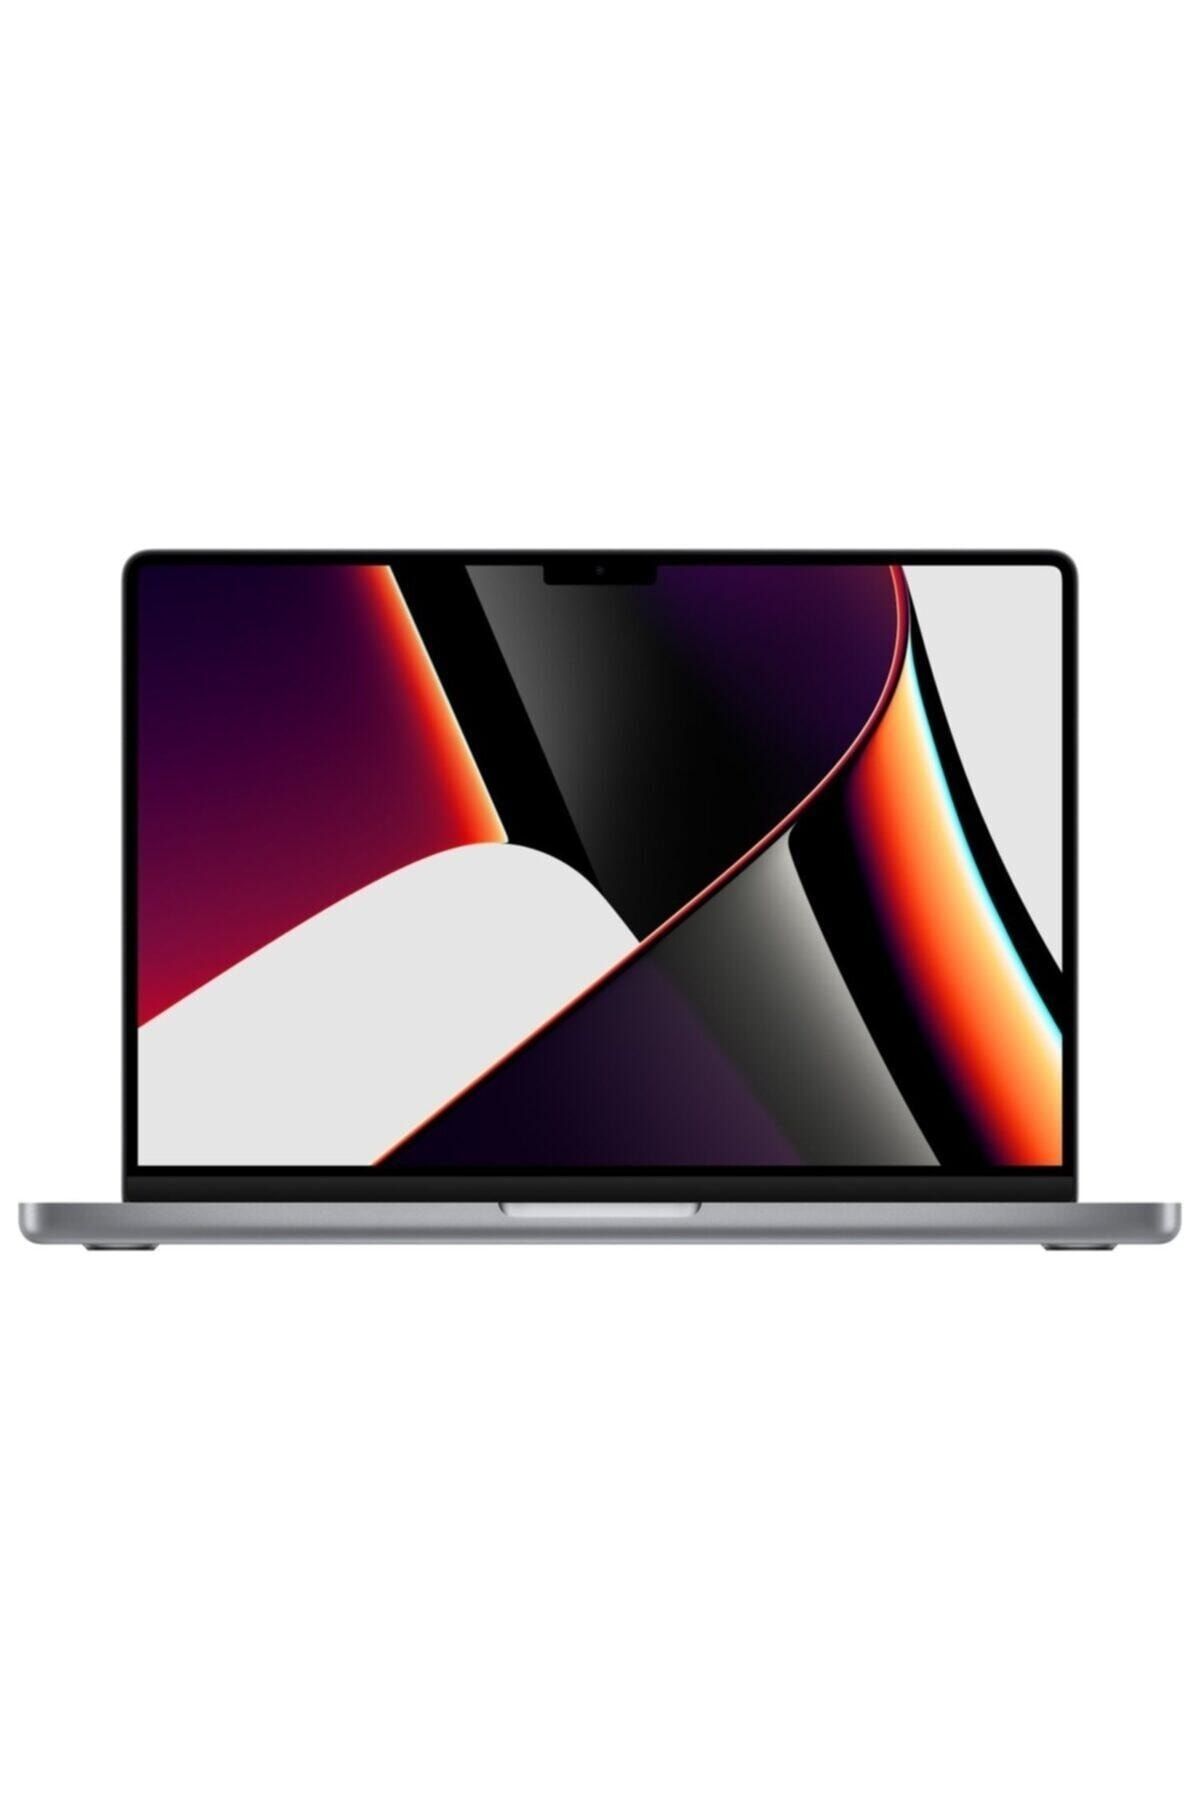 MacBookPro 16GB 512GB 2017 13inch